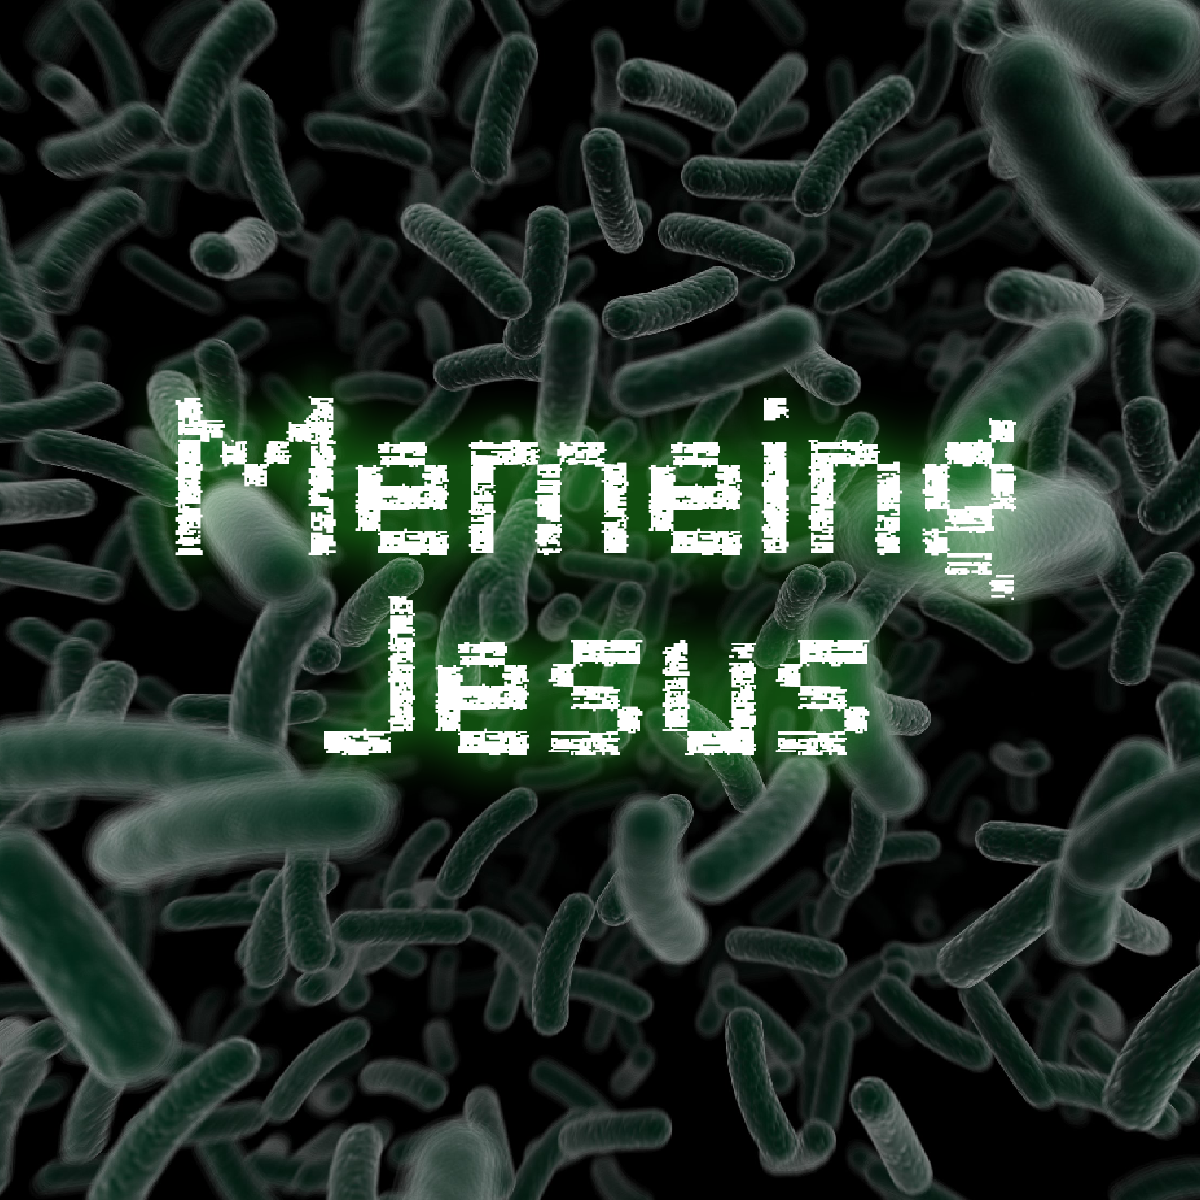 Memeing Jesus | Episode 3: Jesus for President